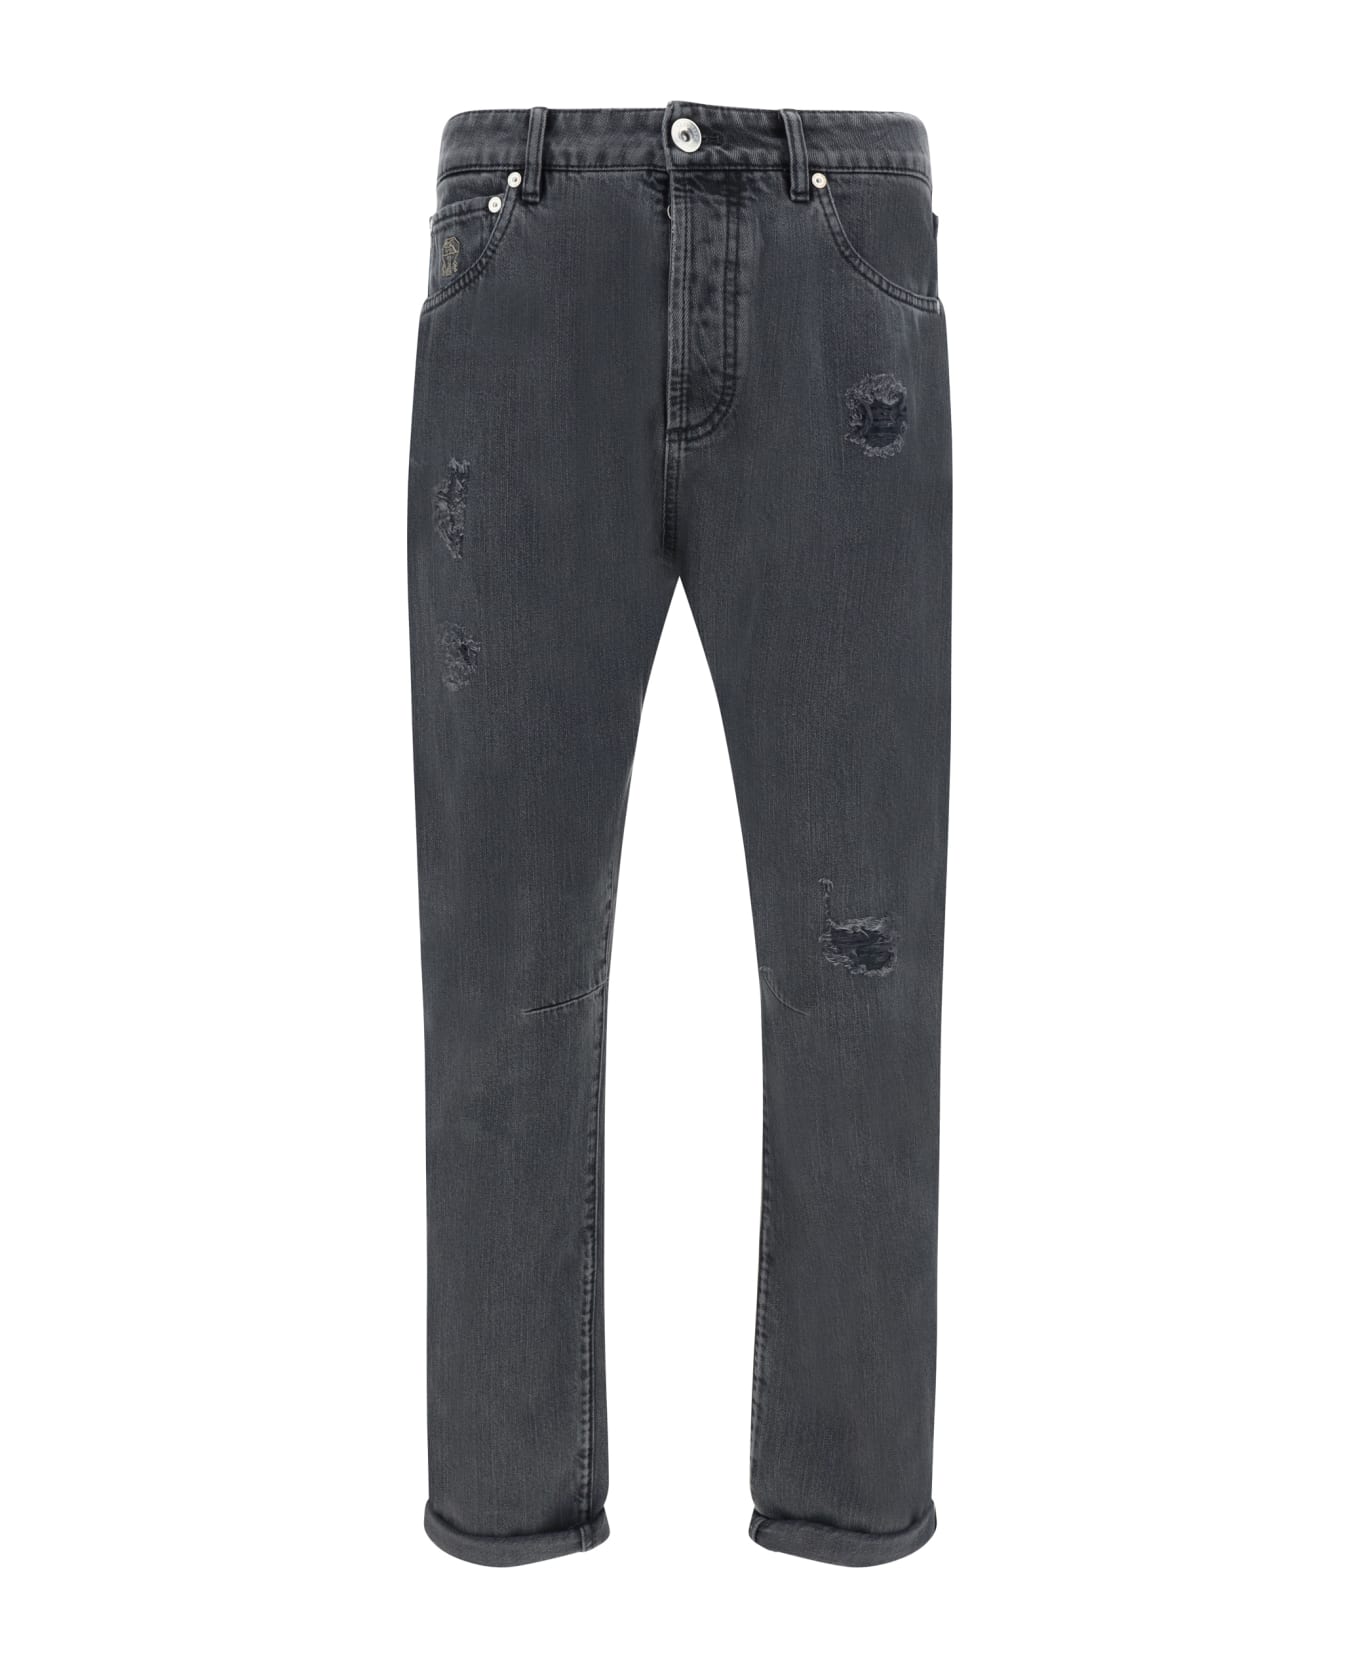 Brunello Cucinelli Jeans - C1482 デニム